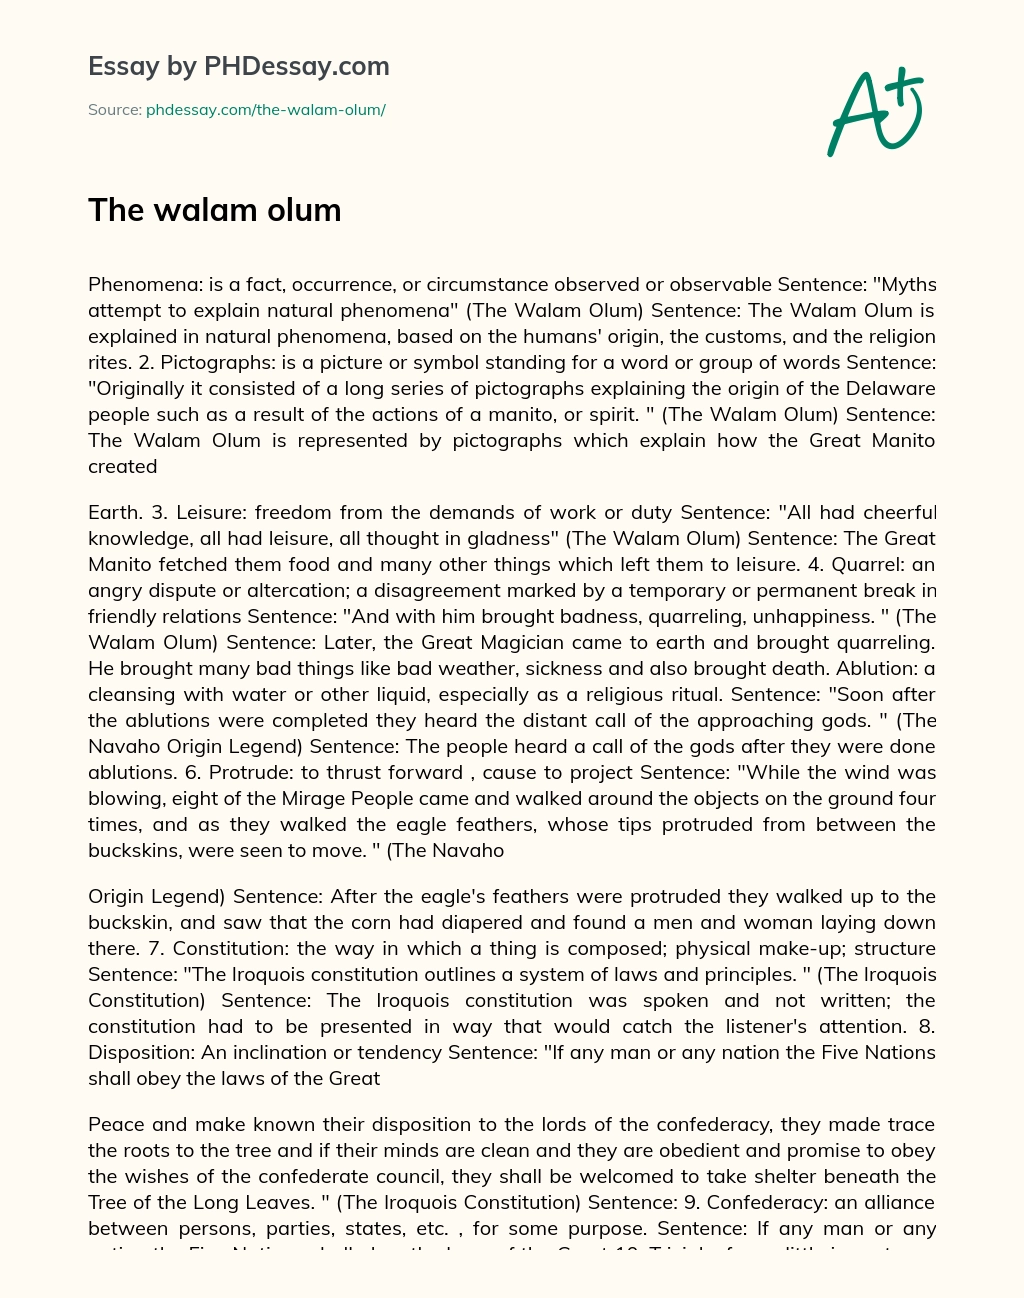 The walam olum essay